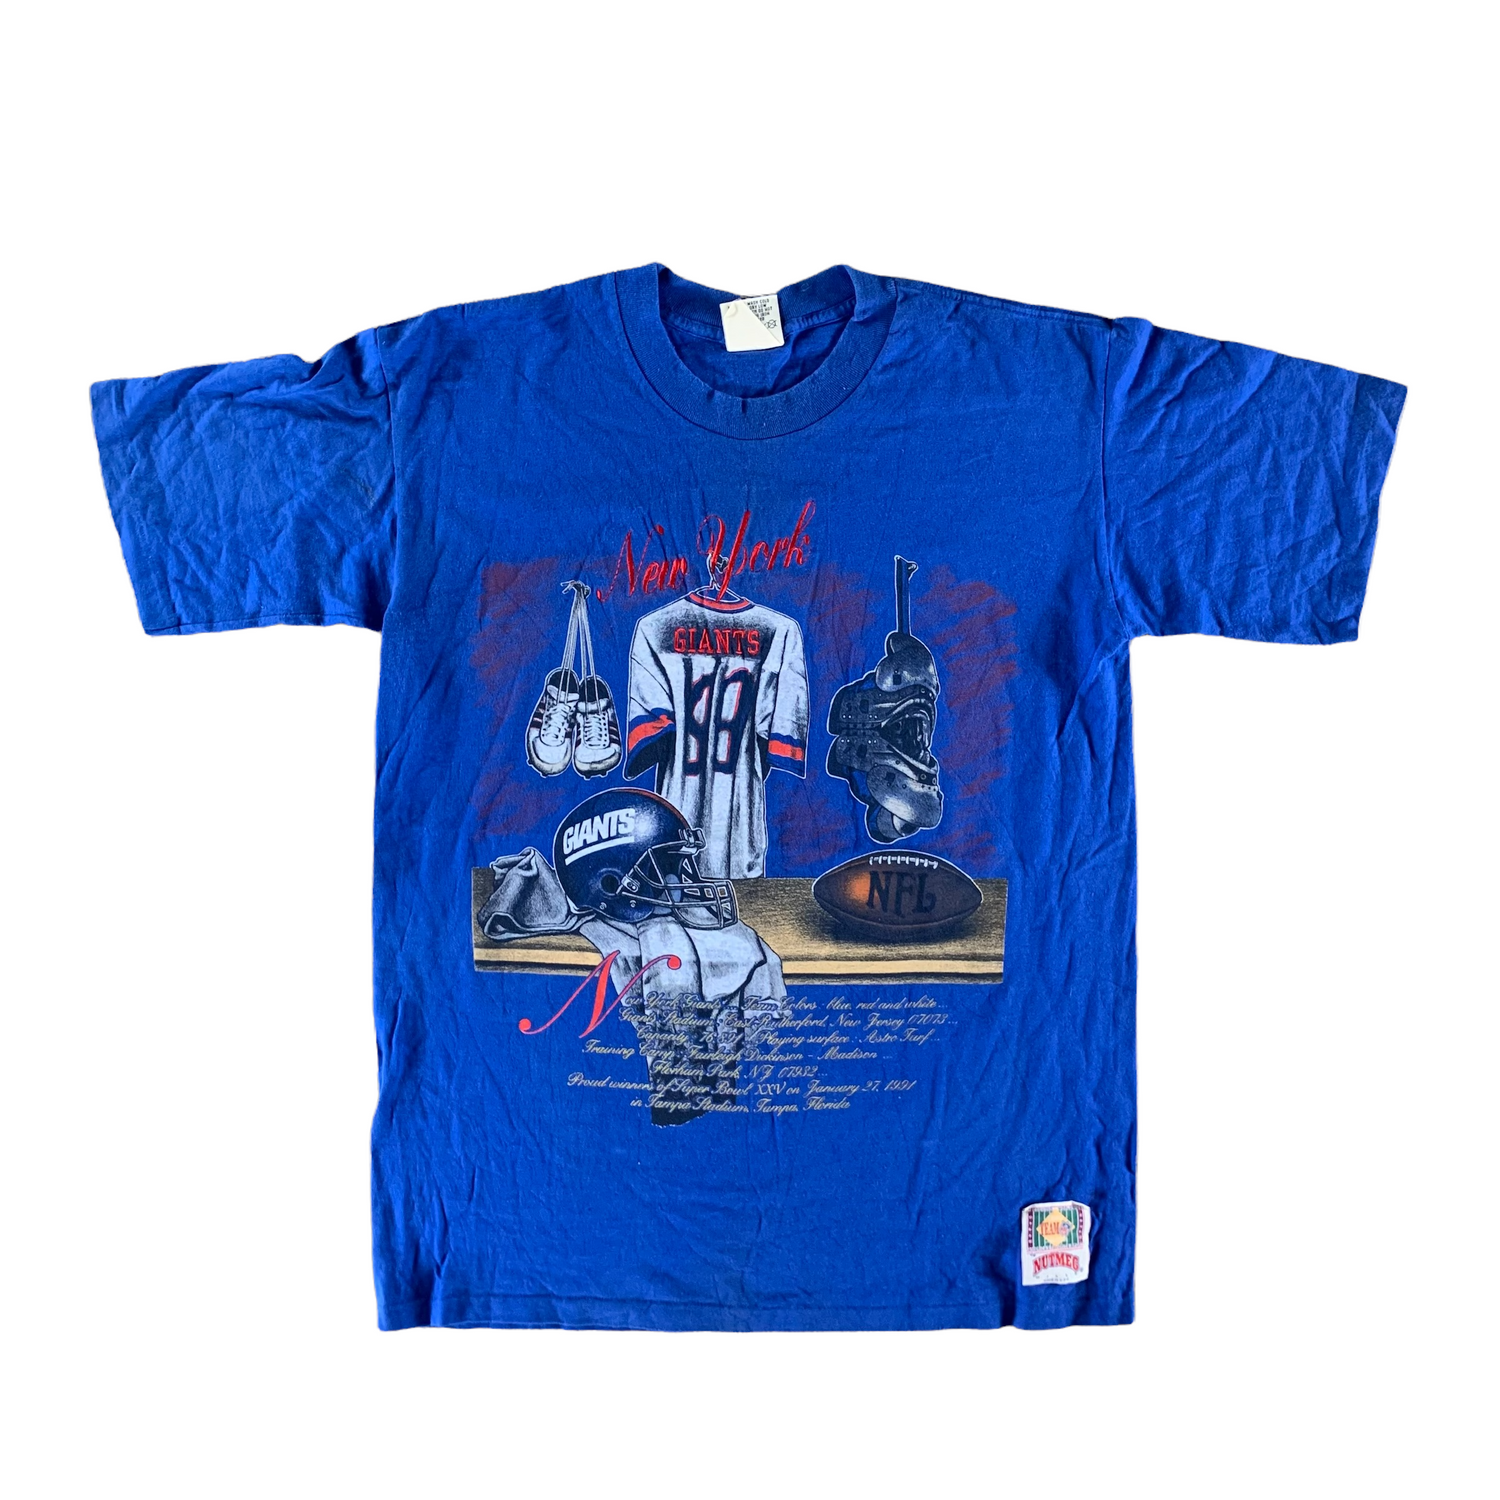 Vintage 1991 New York Giants T-shirt size Large